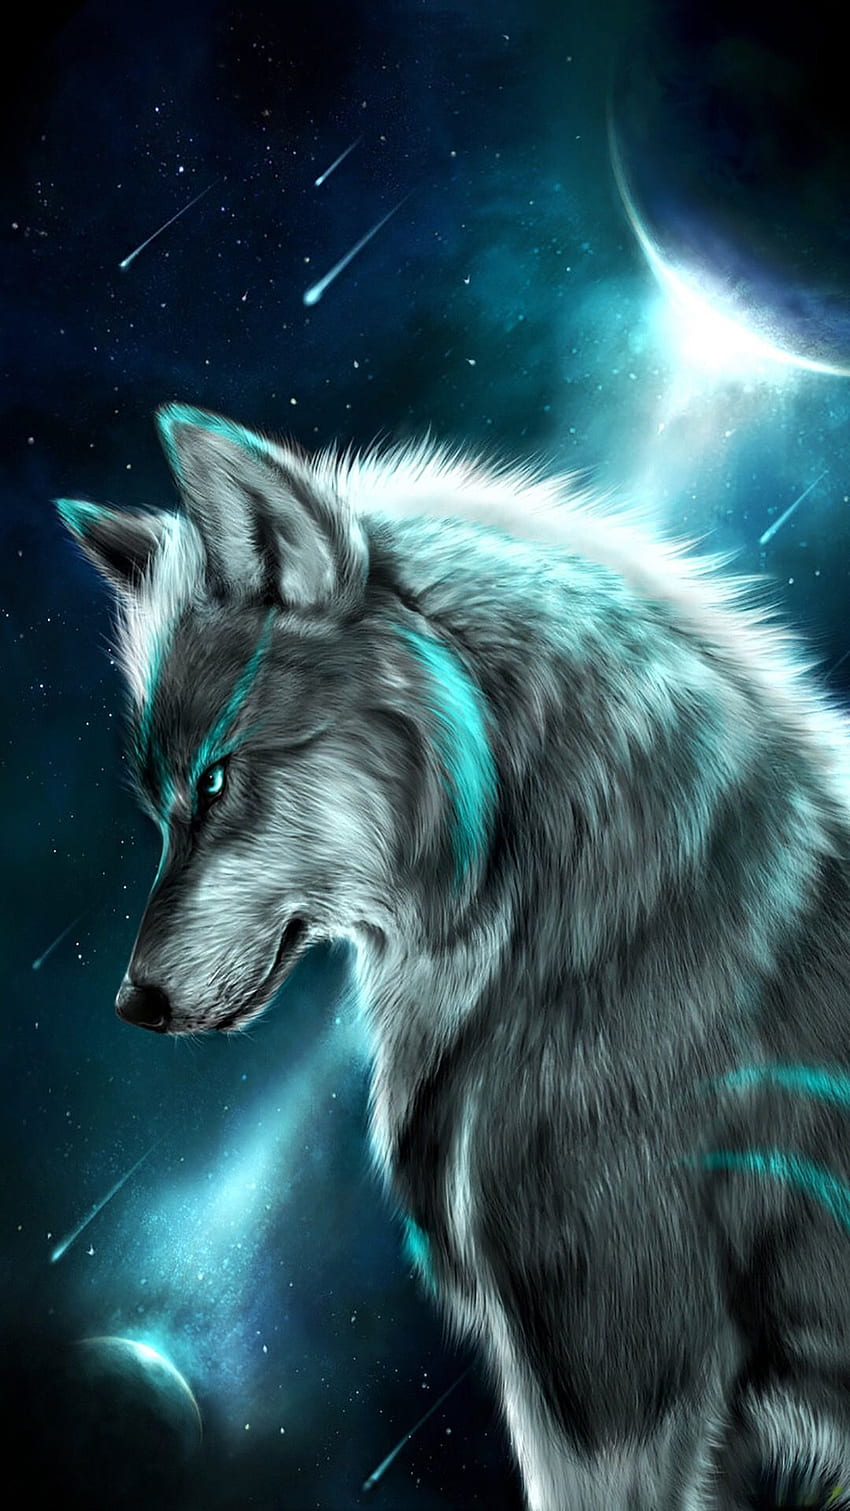   𝐓𝐡𝐞𝐁𝐢𝐠𝐖𝐨𝐥𝐟𝐋𝐢𝐨𝐧  on Twitter Anthro furry wolf  anime scene art drawing httpstcouwcrIMICEE  Twitter